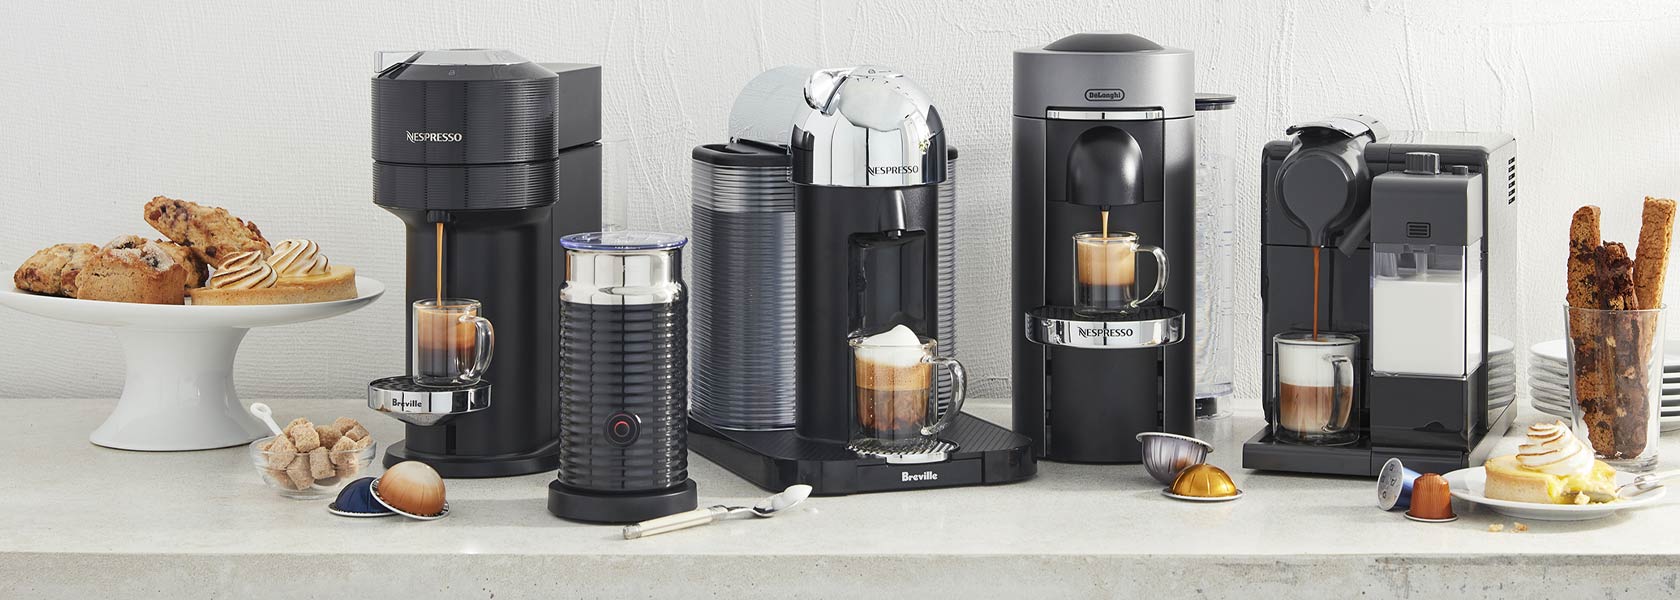 Nespresso coffee and espresso machines